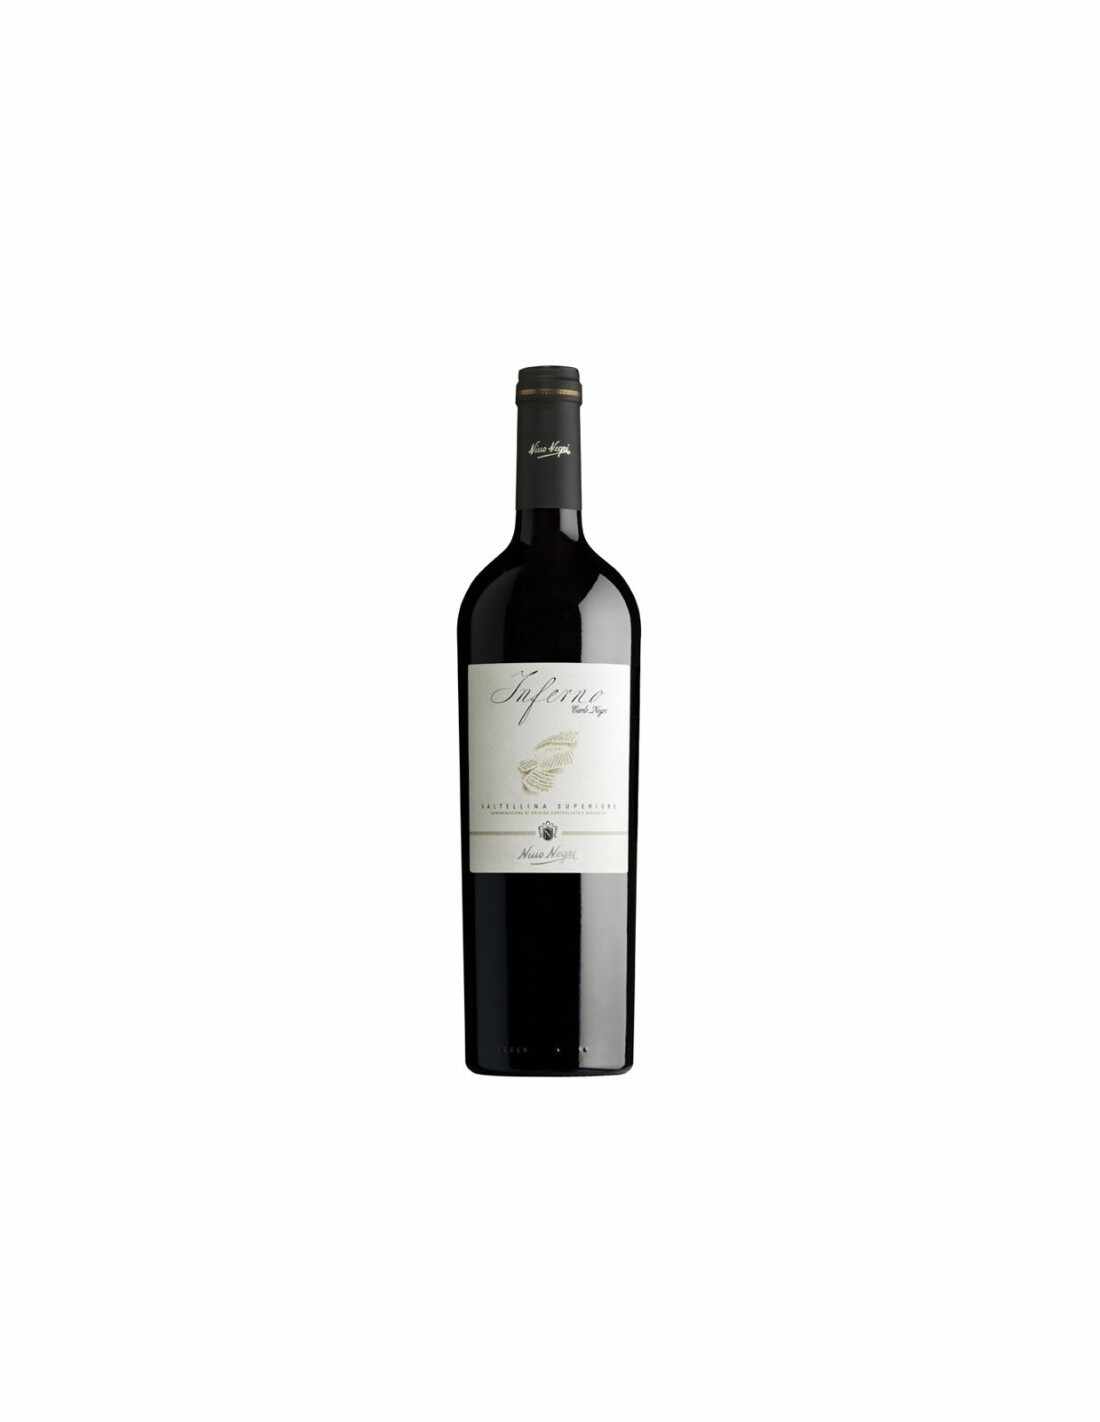 Vin rosu sec, Nebbiolo, Inferno Nino Negri Valtellina, 0.75L, 13.5% alc., Italia